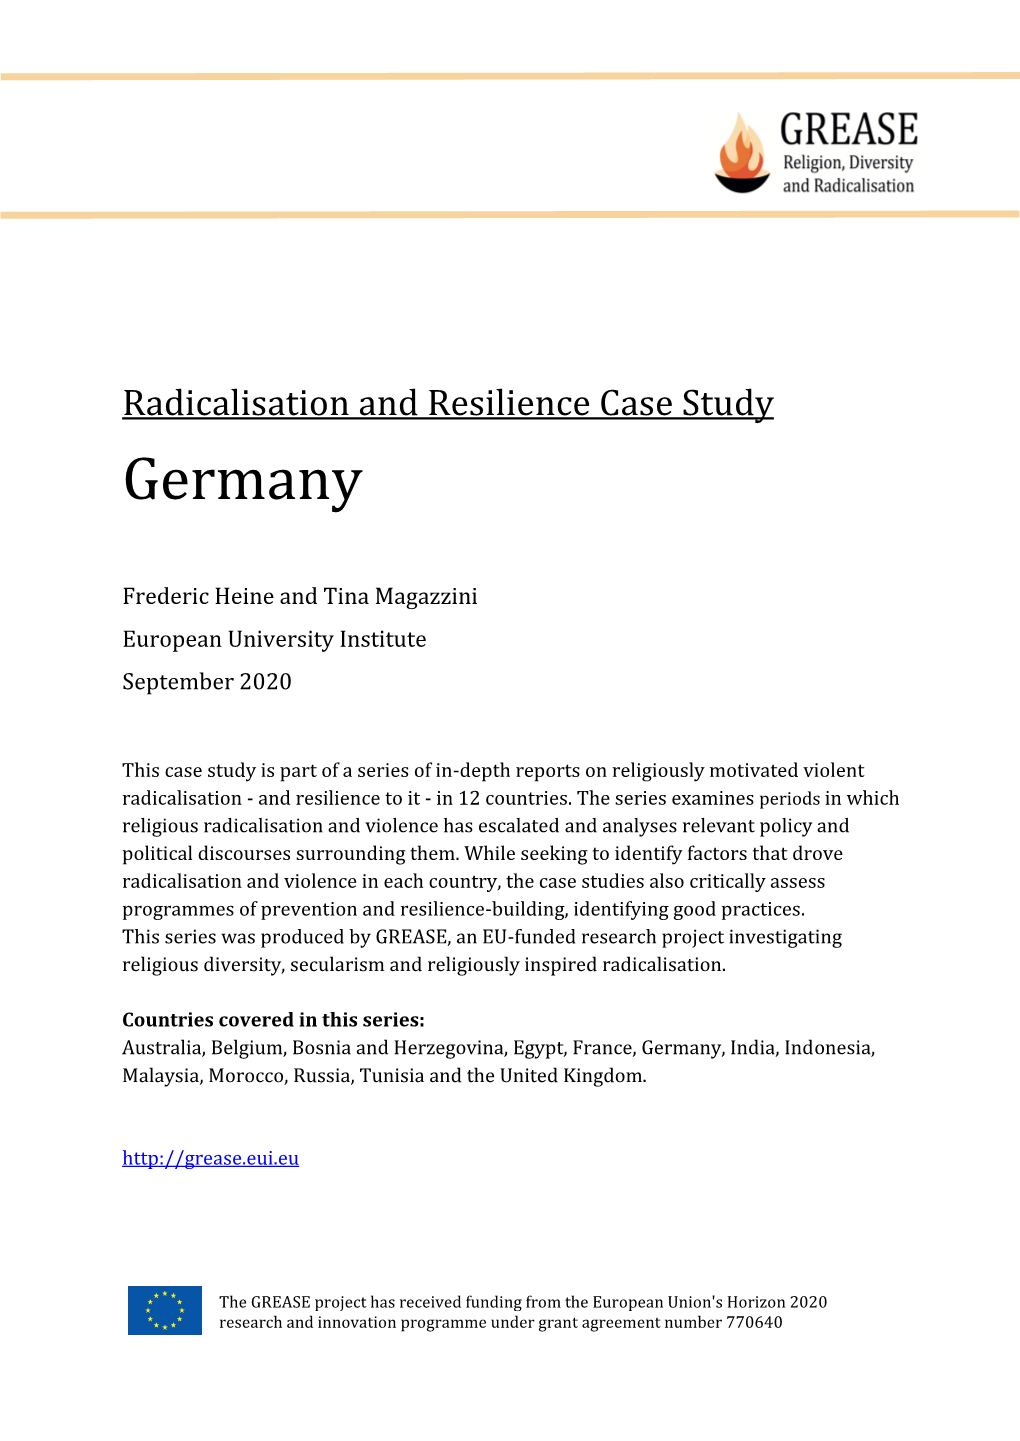 Radicalisation and Resilience Case Study Germany